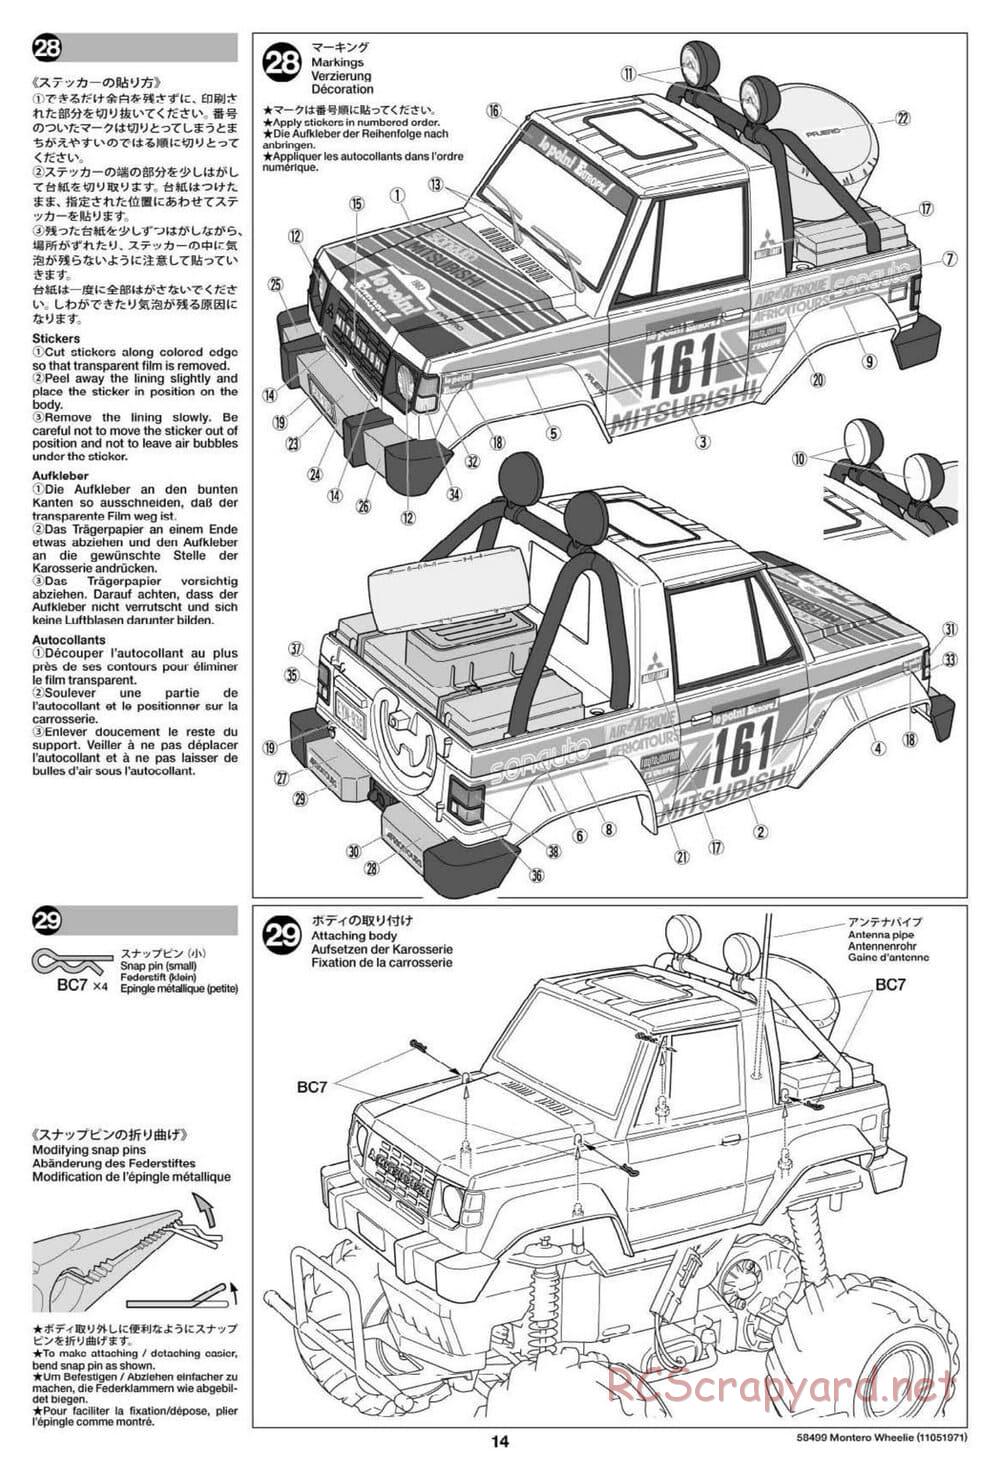 Tamiya - Mitsubishi Montero Wheelie - CW-01 Chassis - Manual - Page 14